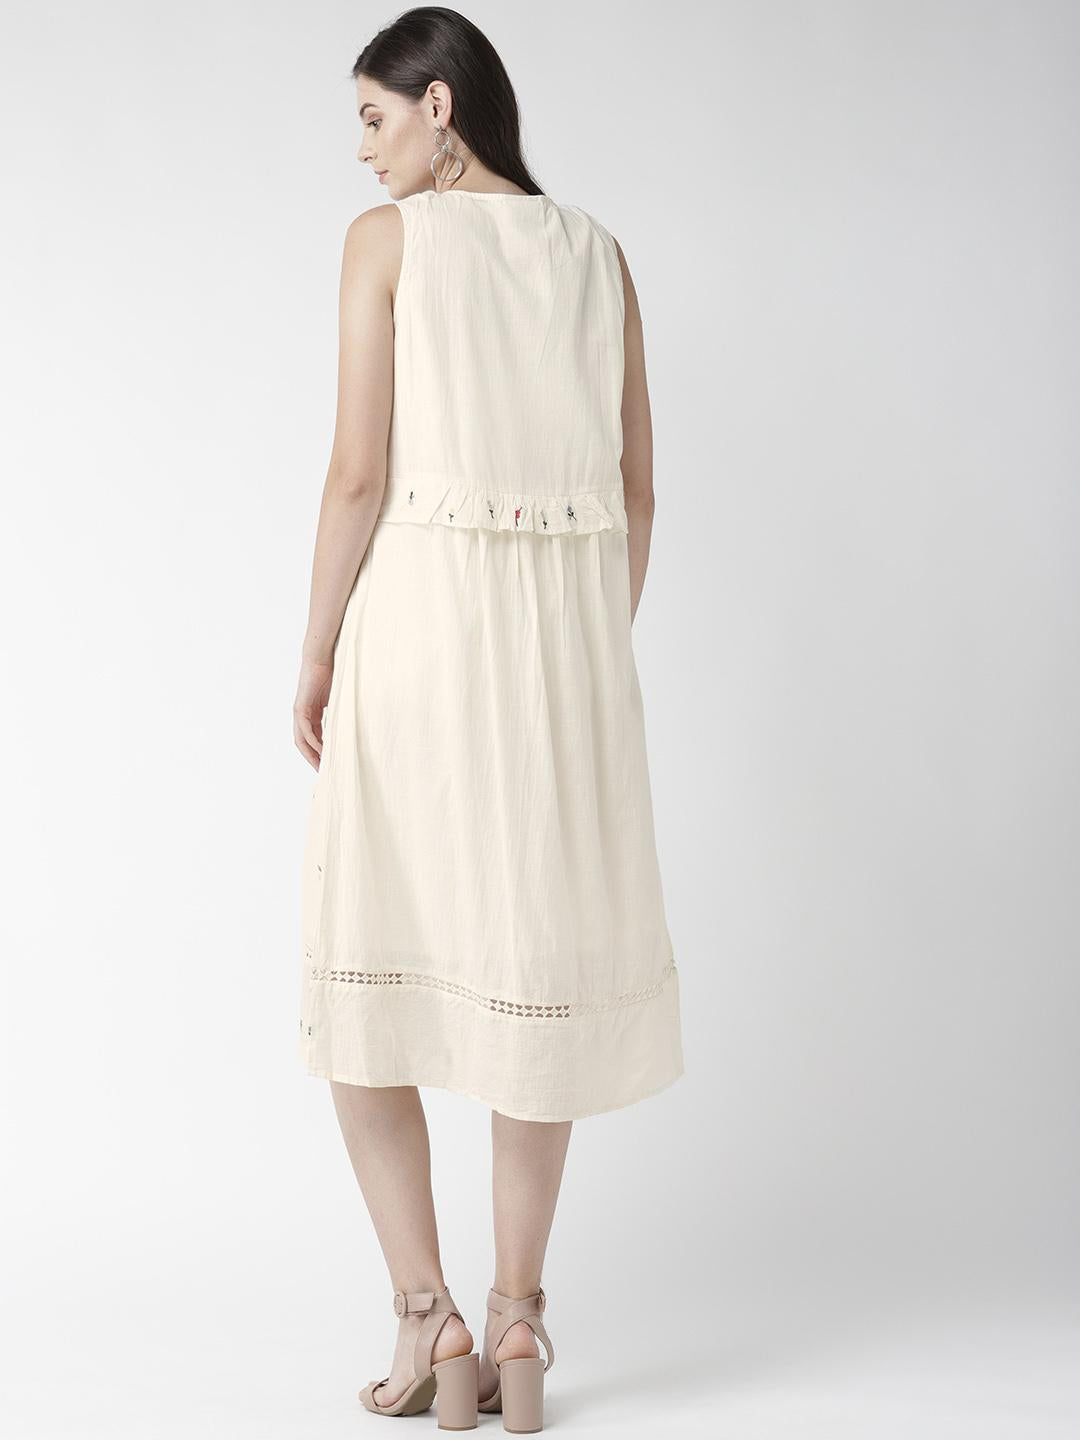 Cotton Sleeveless Embroidered Dress